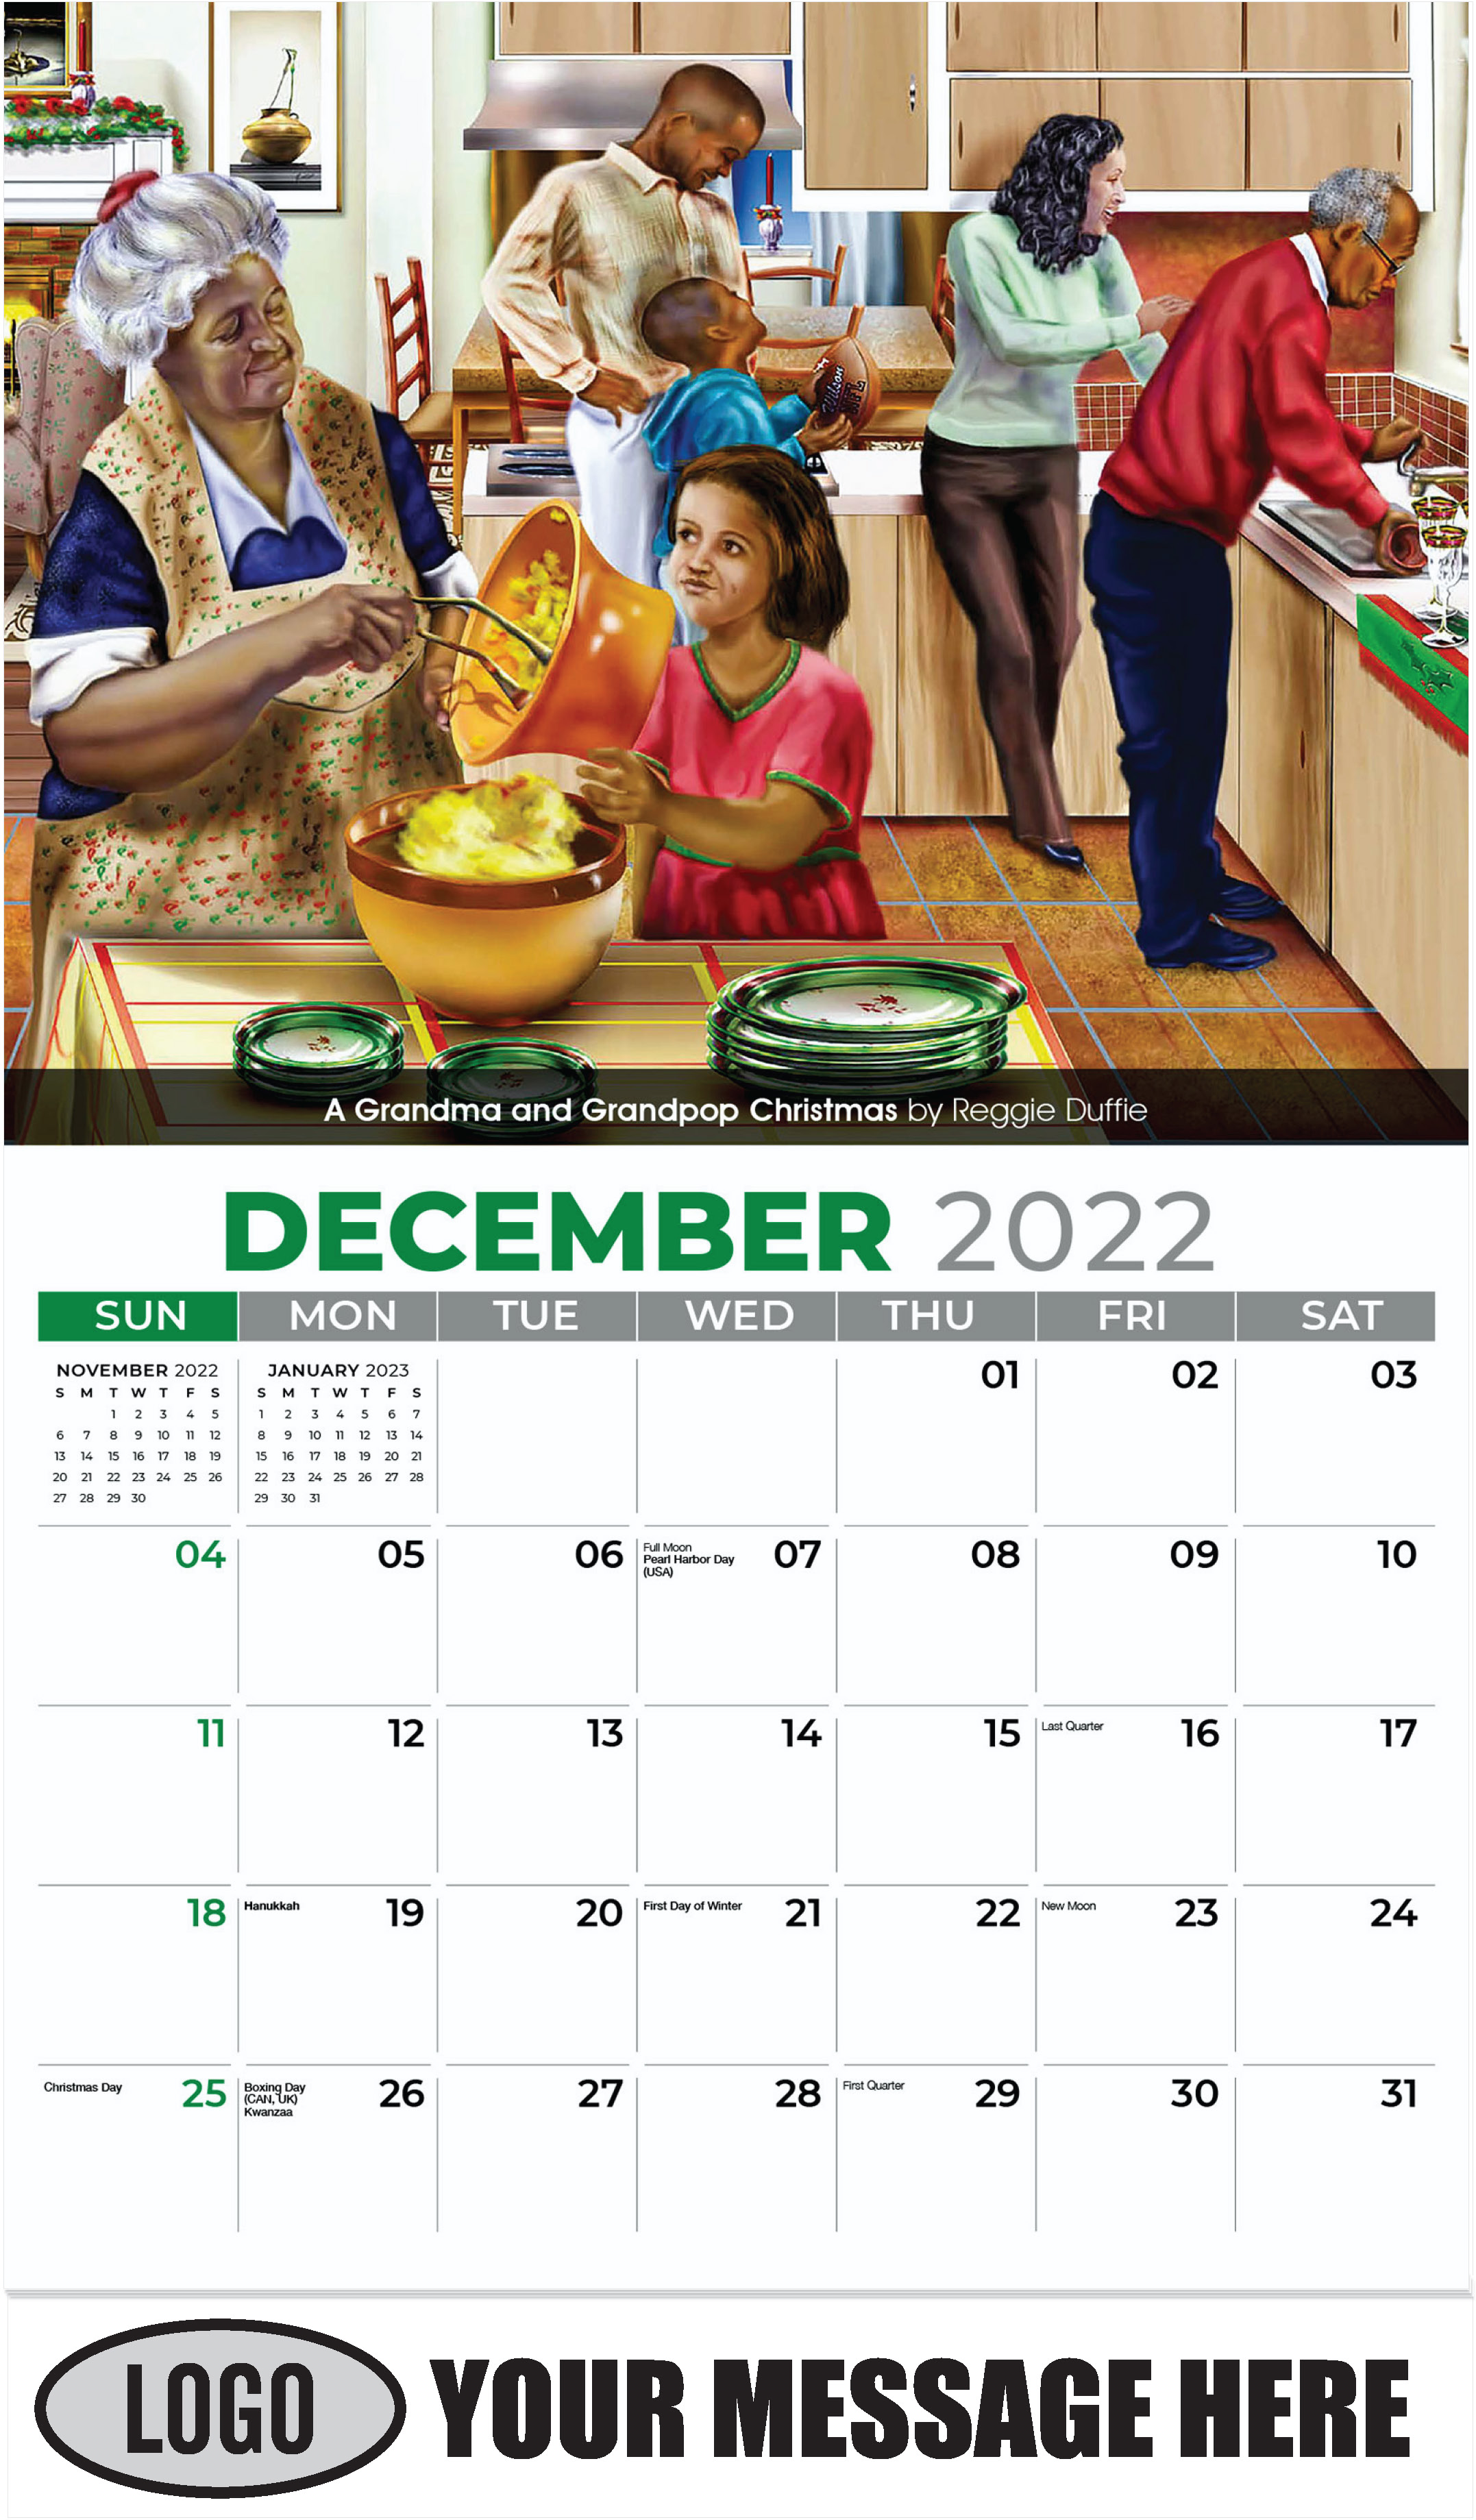 A Grandma and Grandpop Christmas by Reggie Duffie - December 2022 - Celebration of African American Art 2023 Promotional Calendar